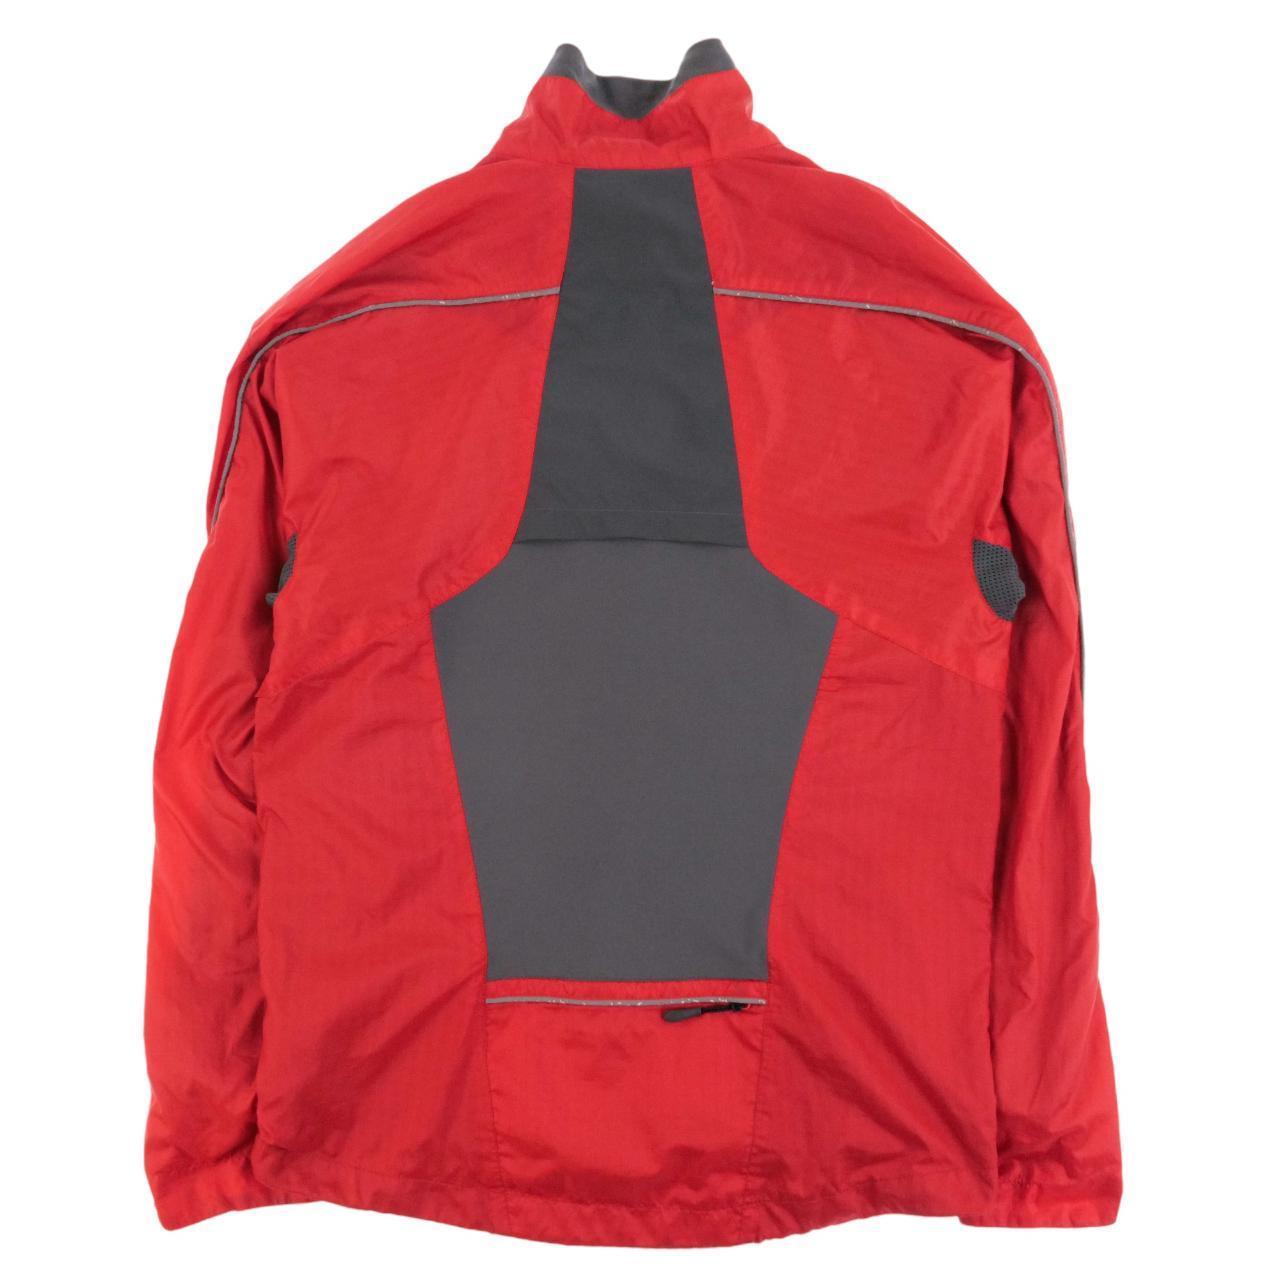 Vintage Salomon Jacket Size M - Known Source